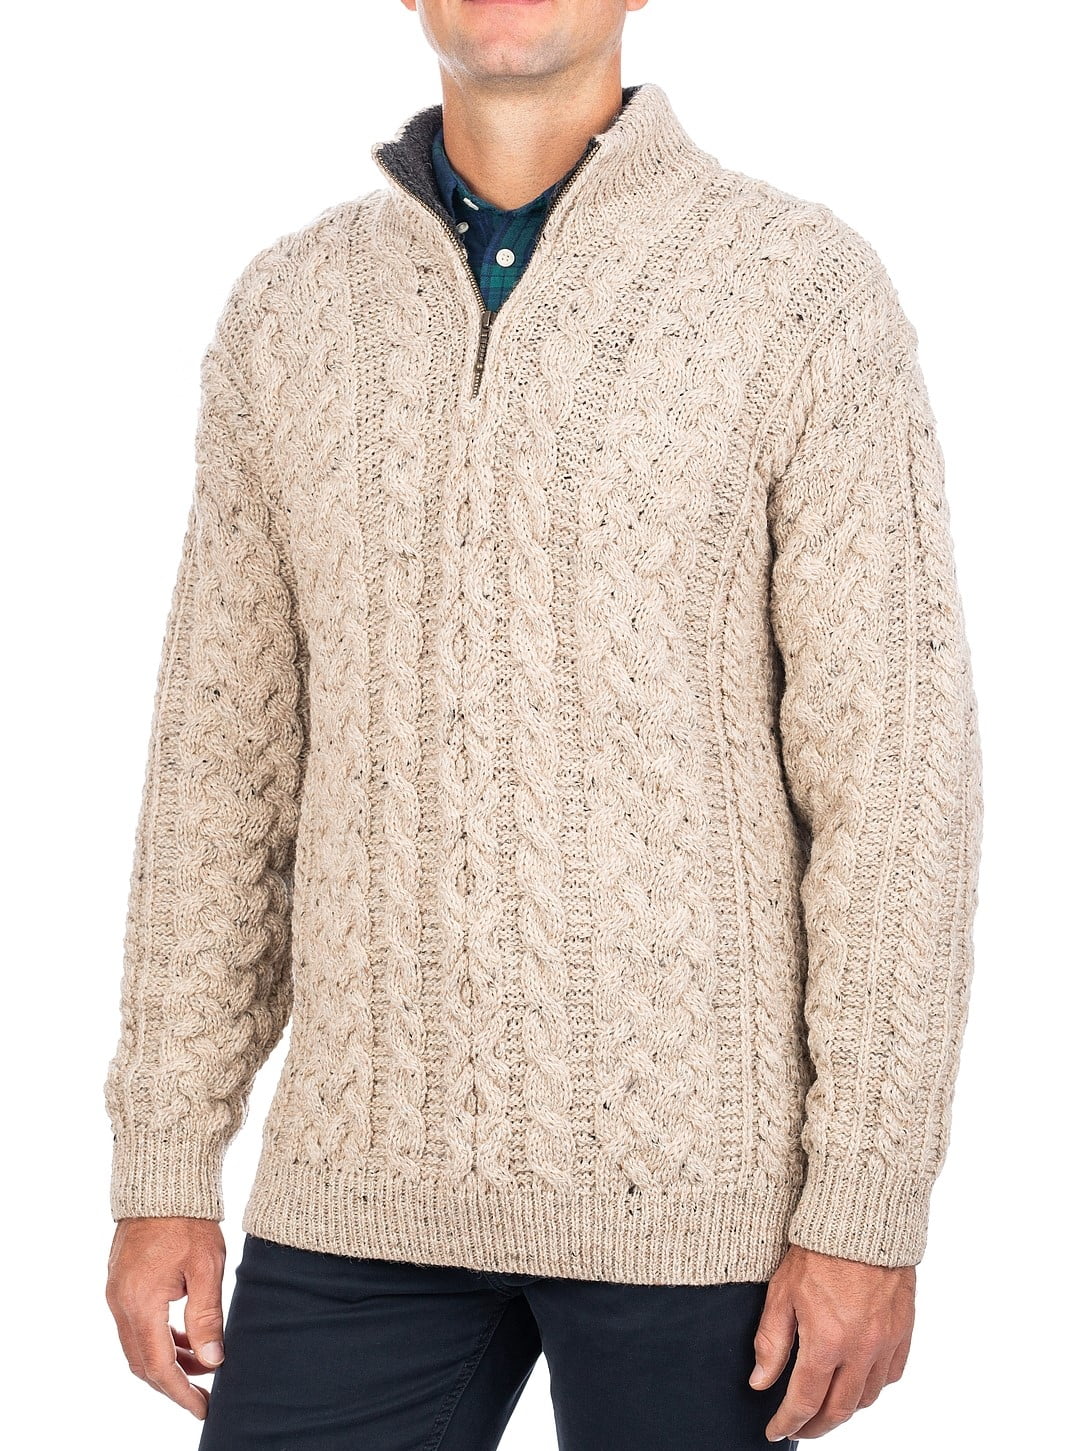 SAOL Aran Quarter Zip Cardigan Sweater 100% Soft Worsted Wool Pullover ...